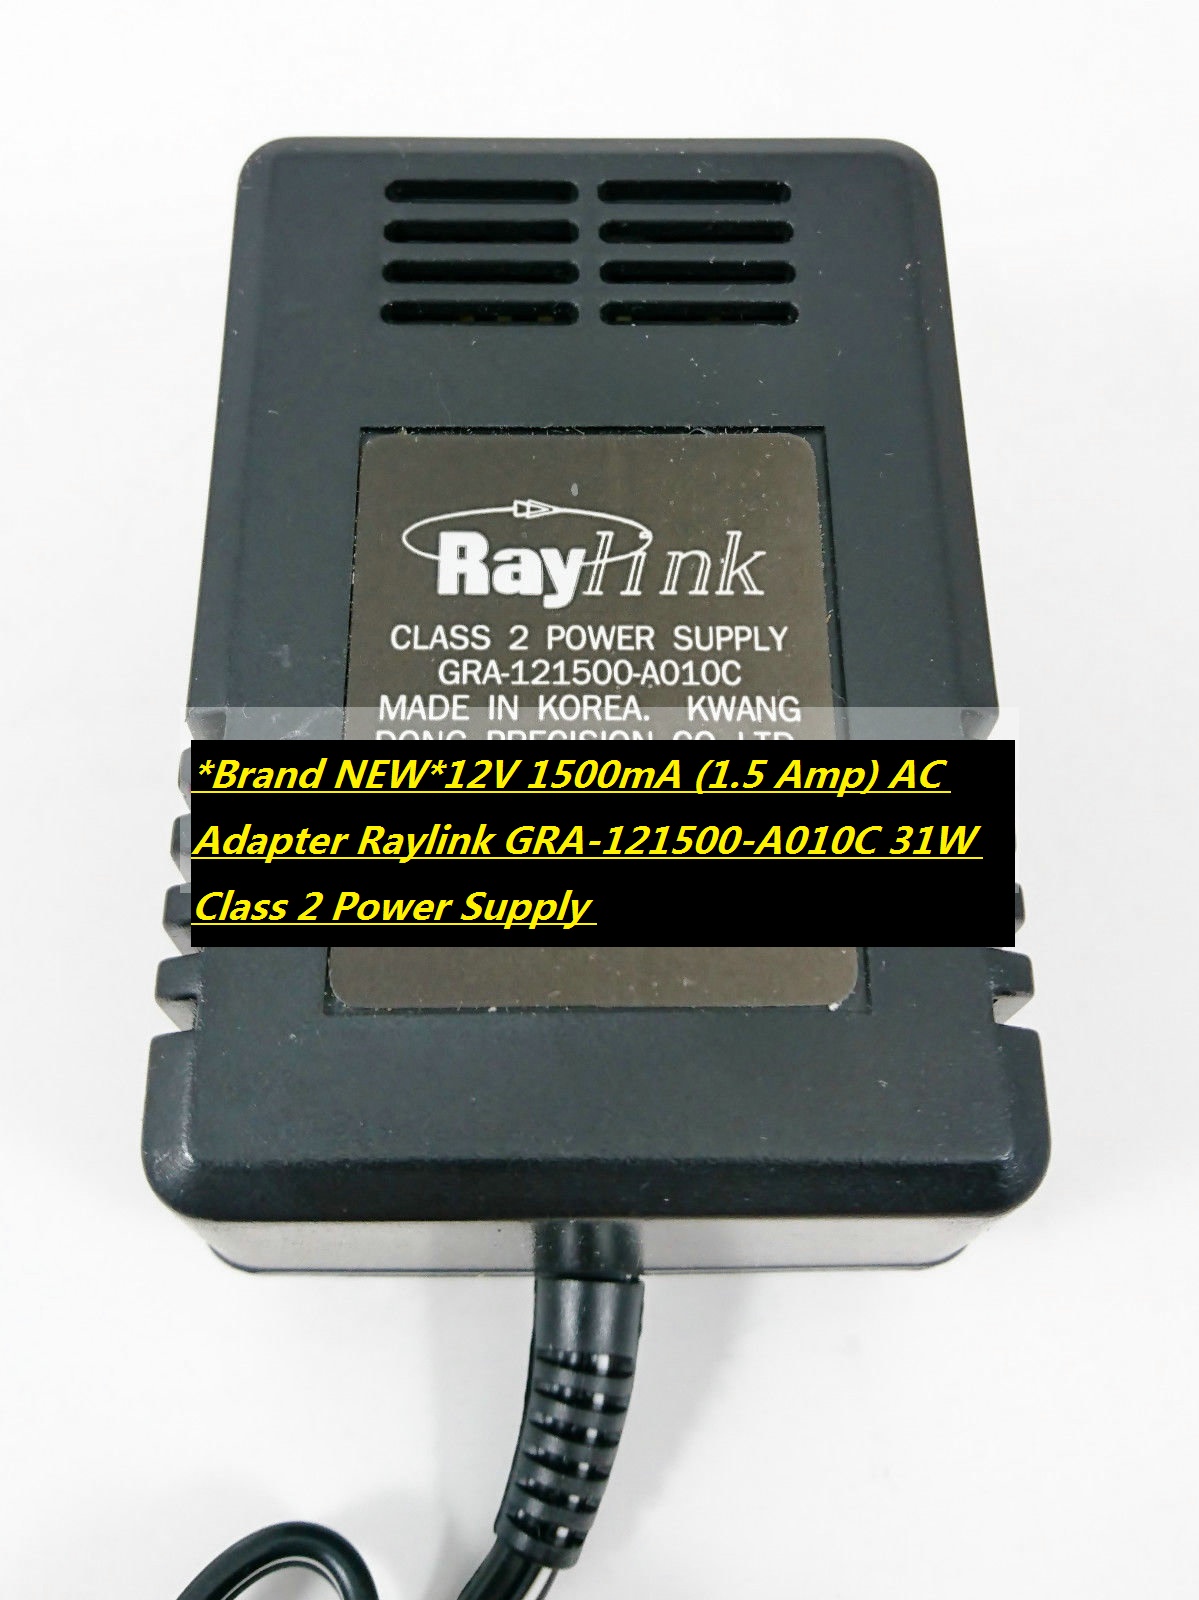 *Brand NEW*12V 1500mA (1.5 Amp) AC Adapter Raylink GRA-121500-A010C 31W Class 2 Power Supply